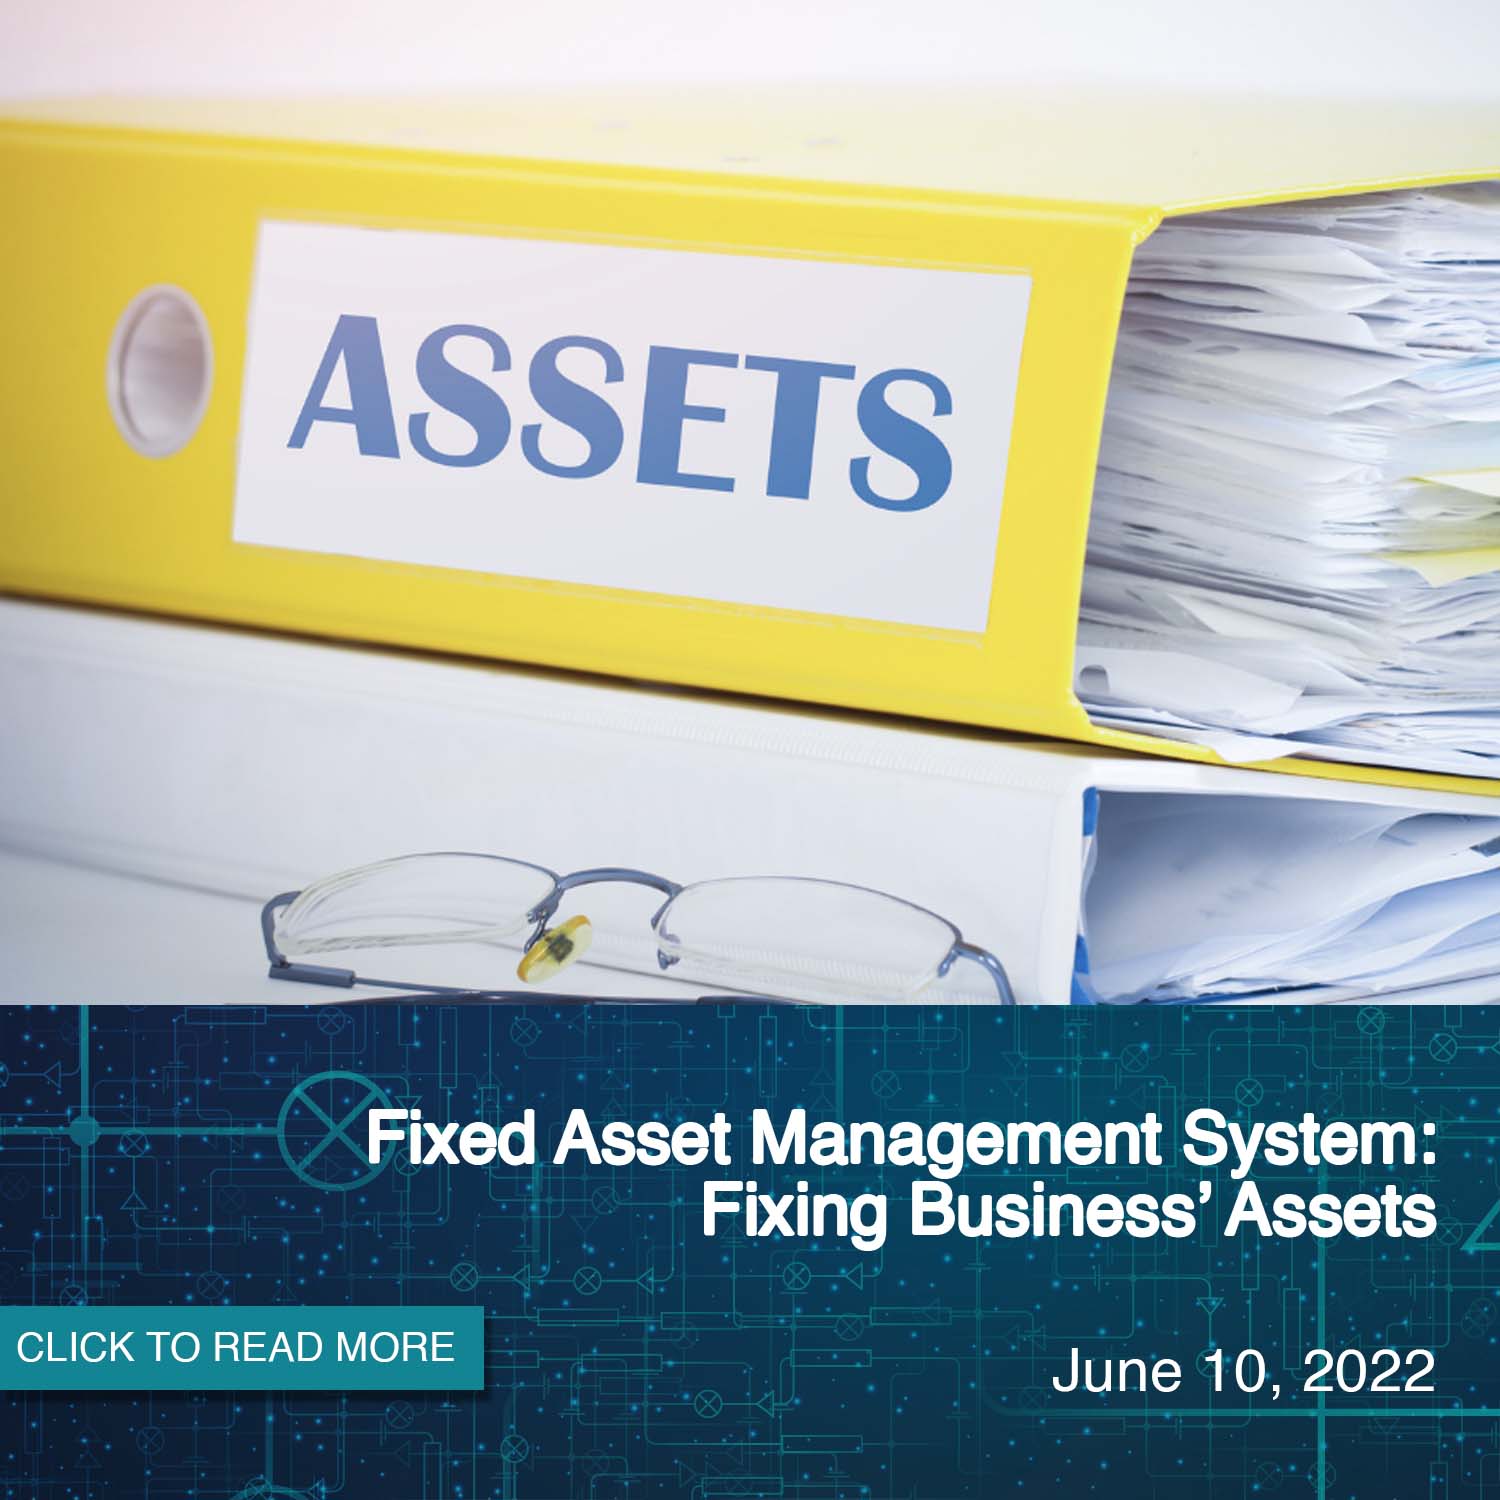 Fixed Asset Management System